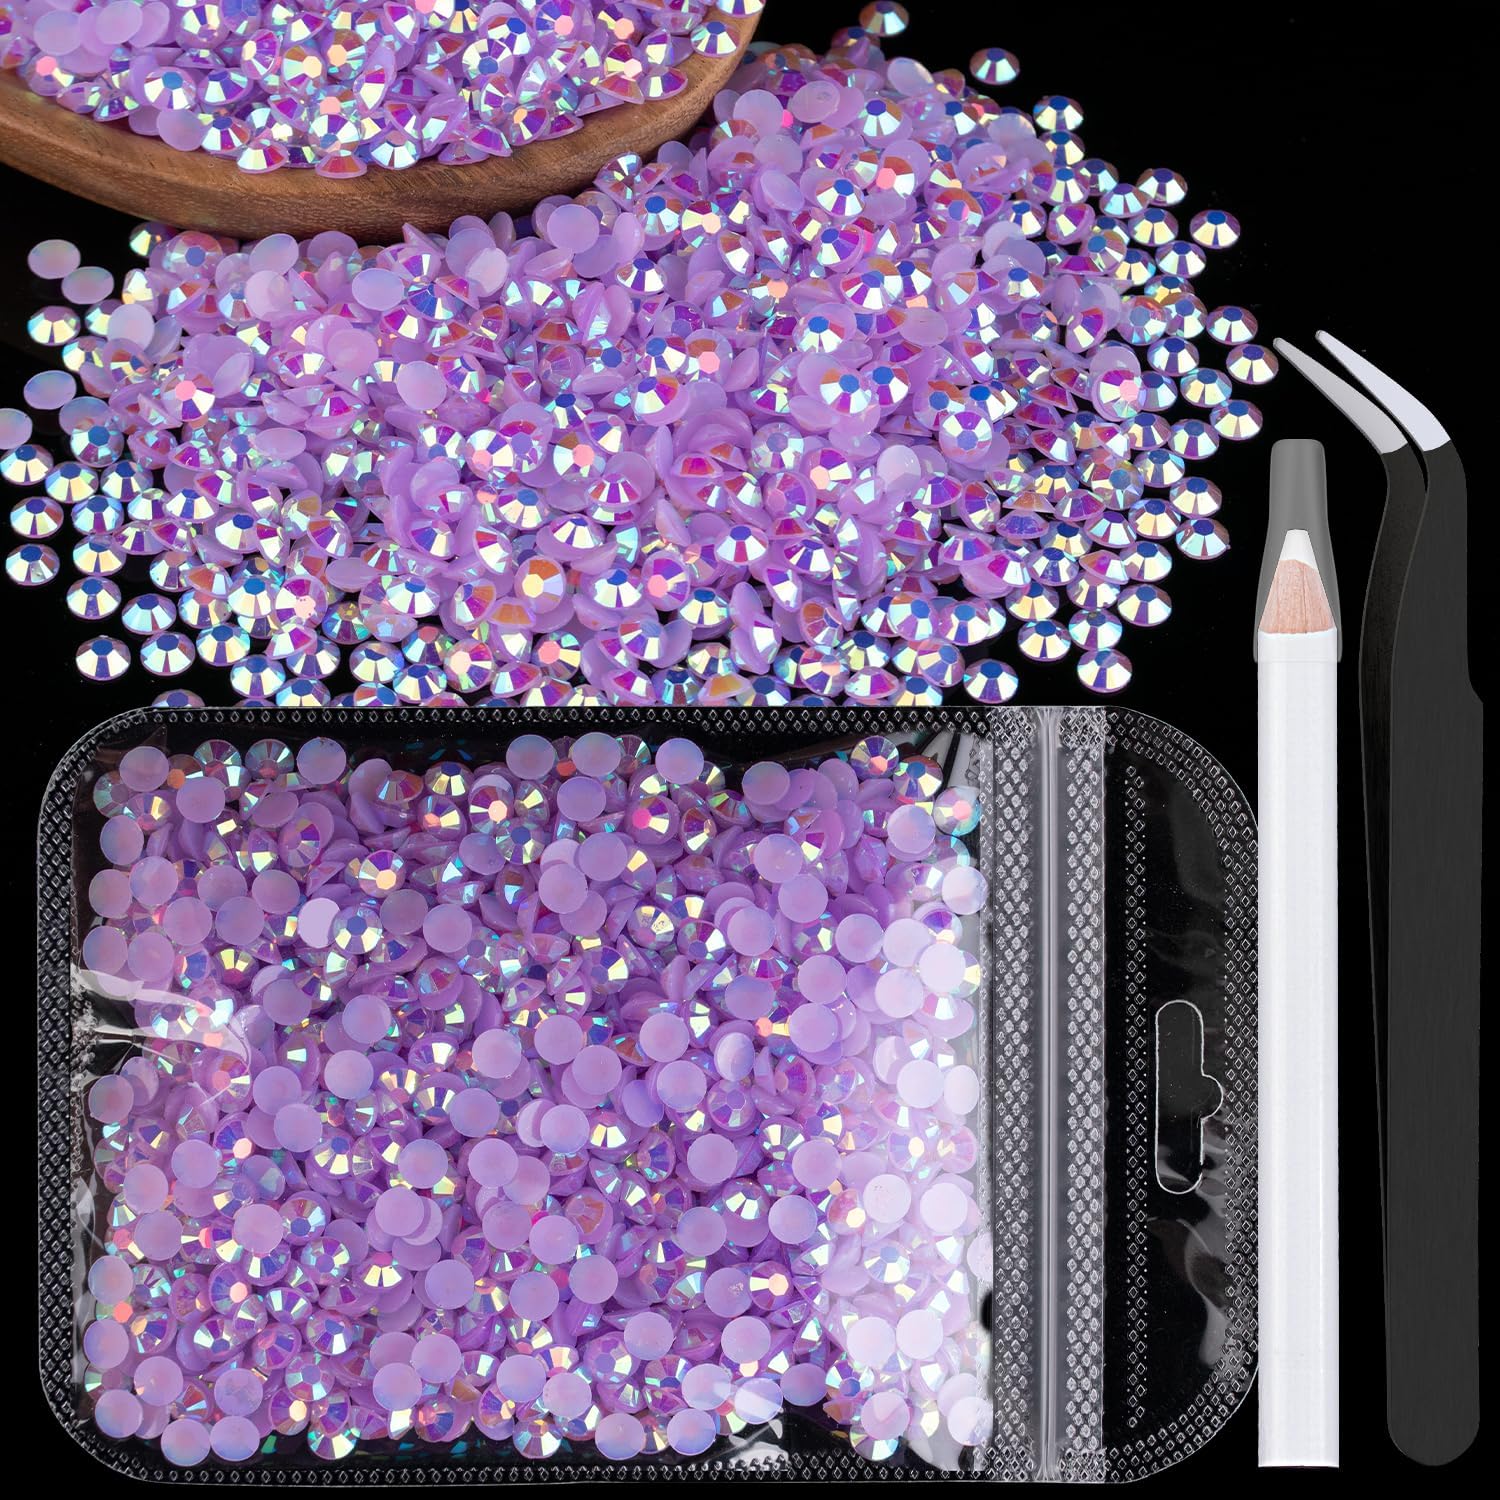 1000 High Quality Resin Crystal Flat Back Rhinestone Gems Nail Art Craft  Face